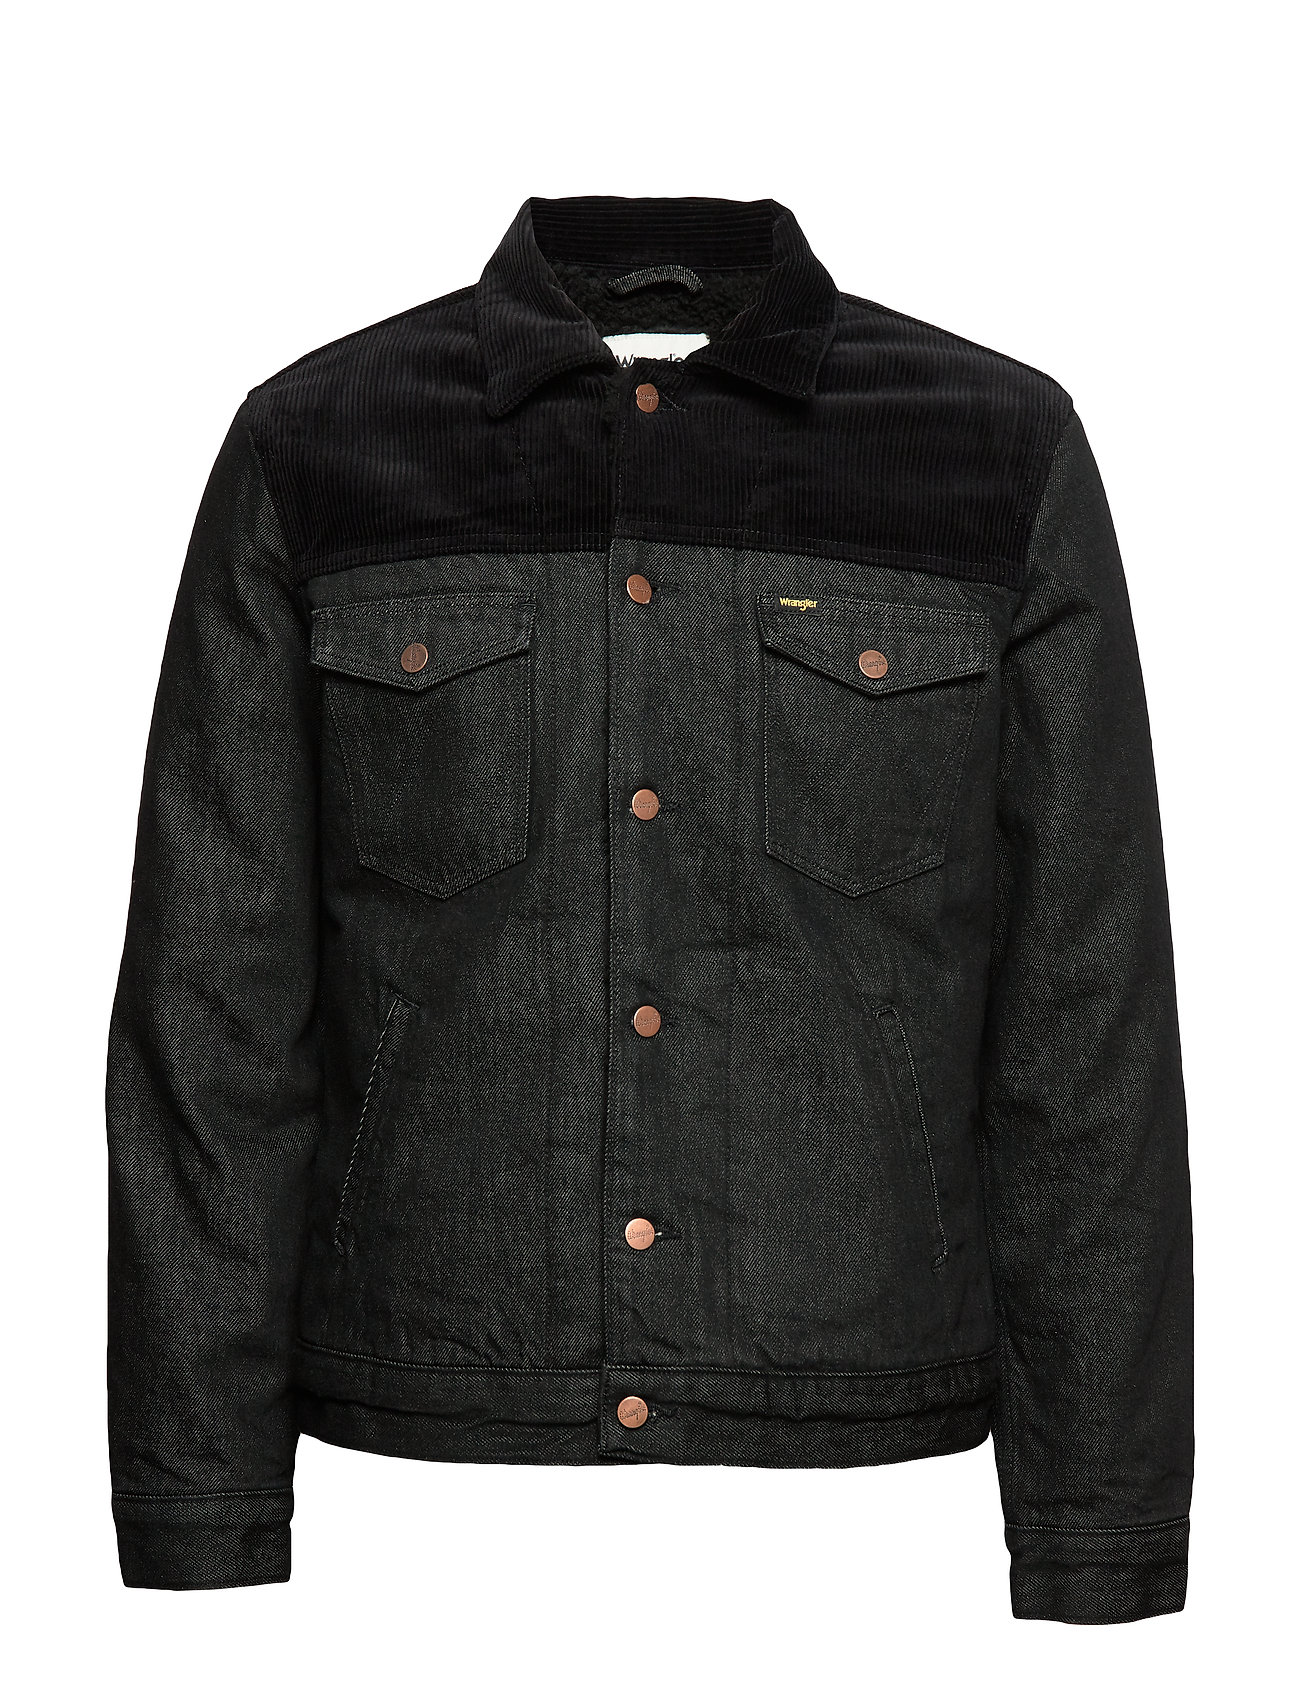 wrangler black jacket